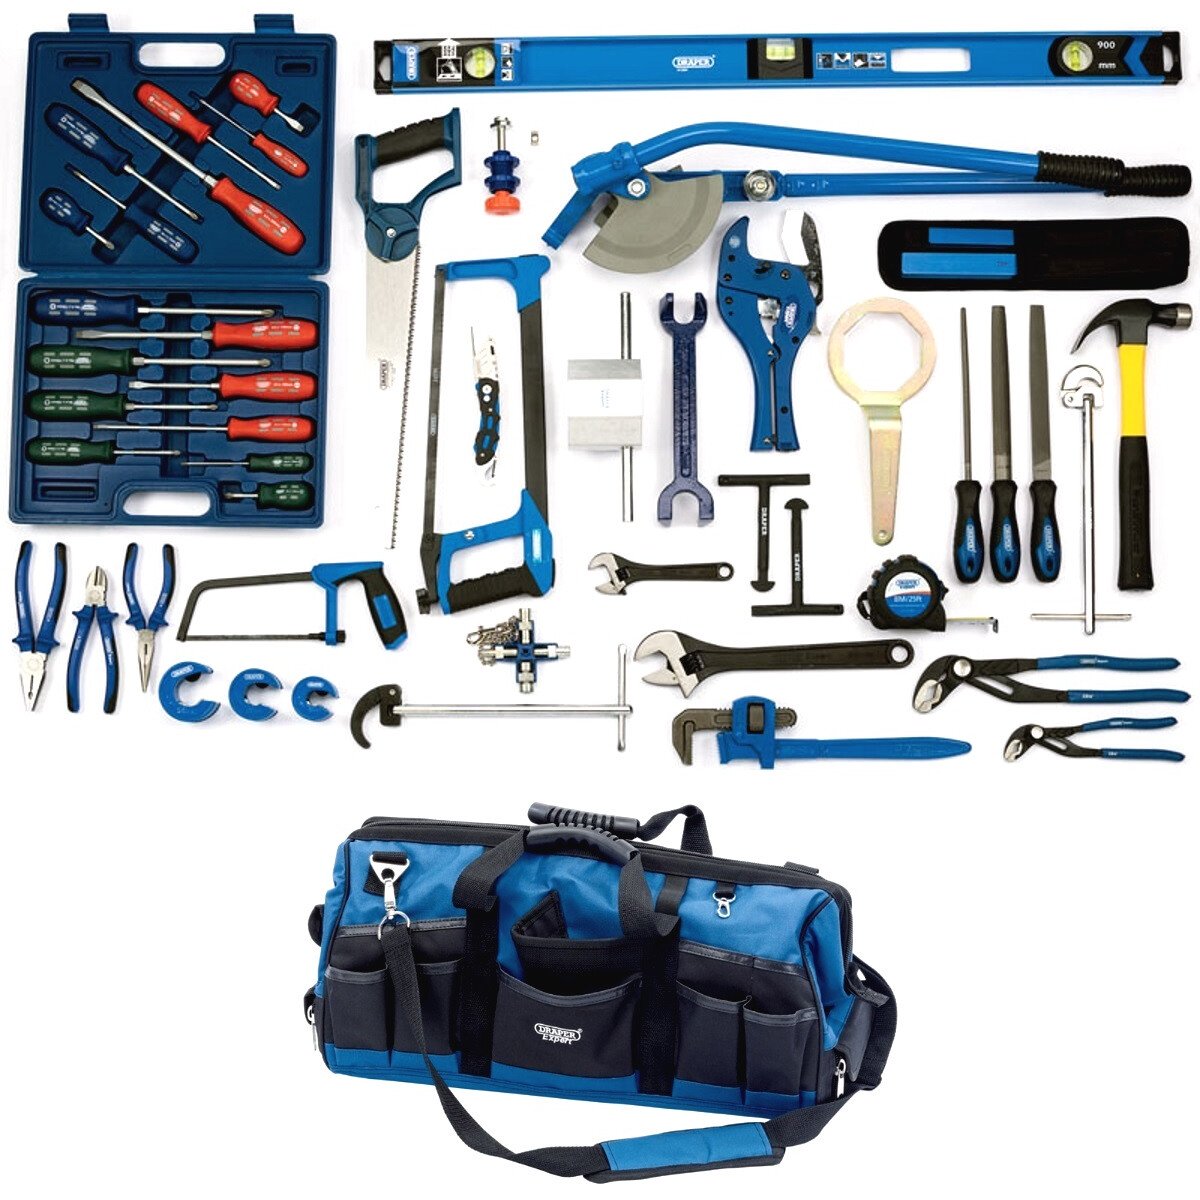 Draper 04380 *PLUMBTK Plumbing Tool Kit